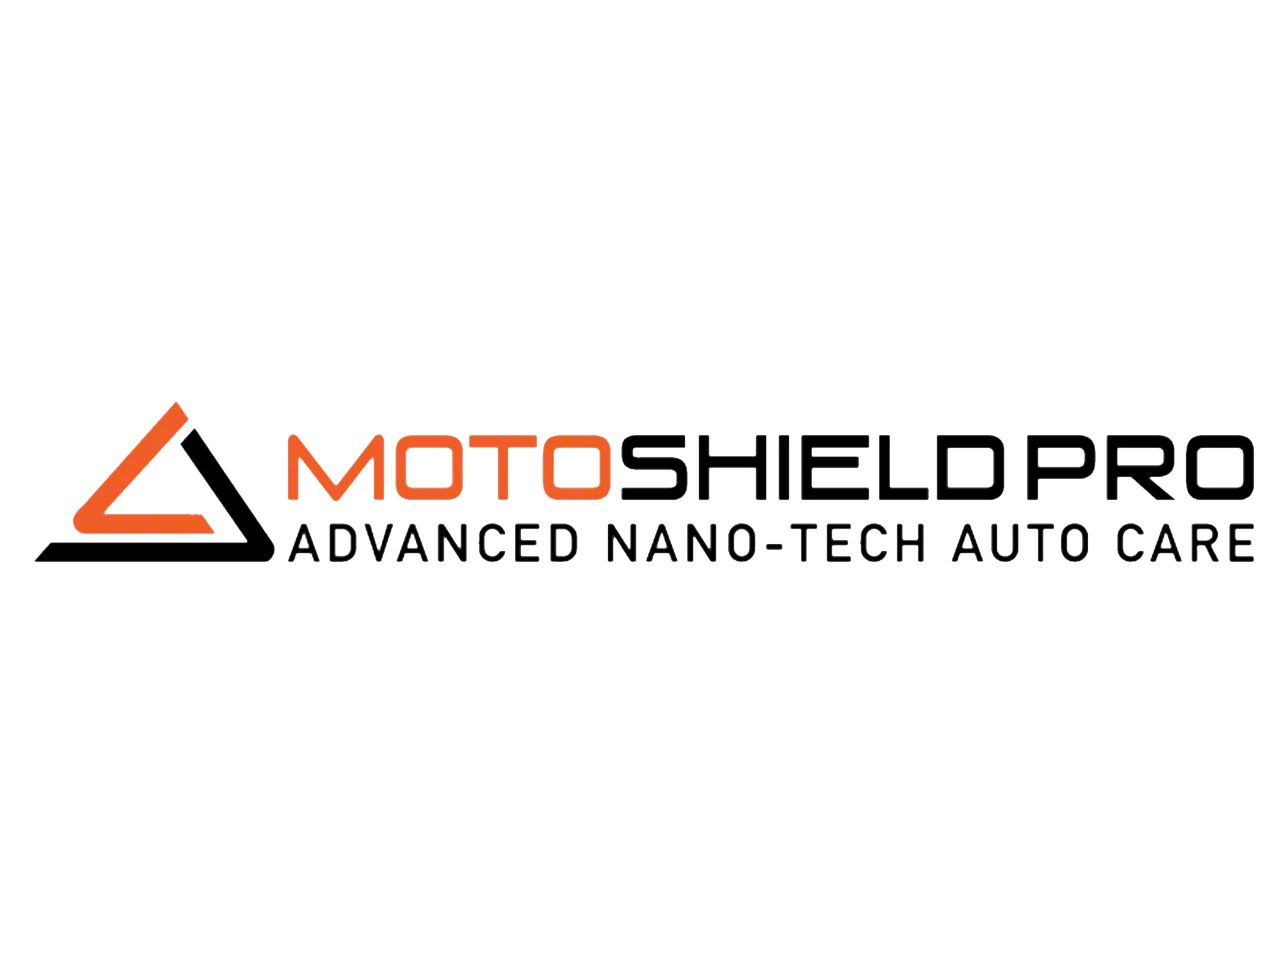 MotoShieldPro Parts